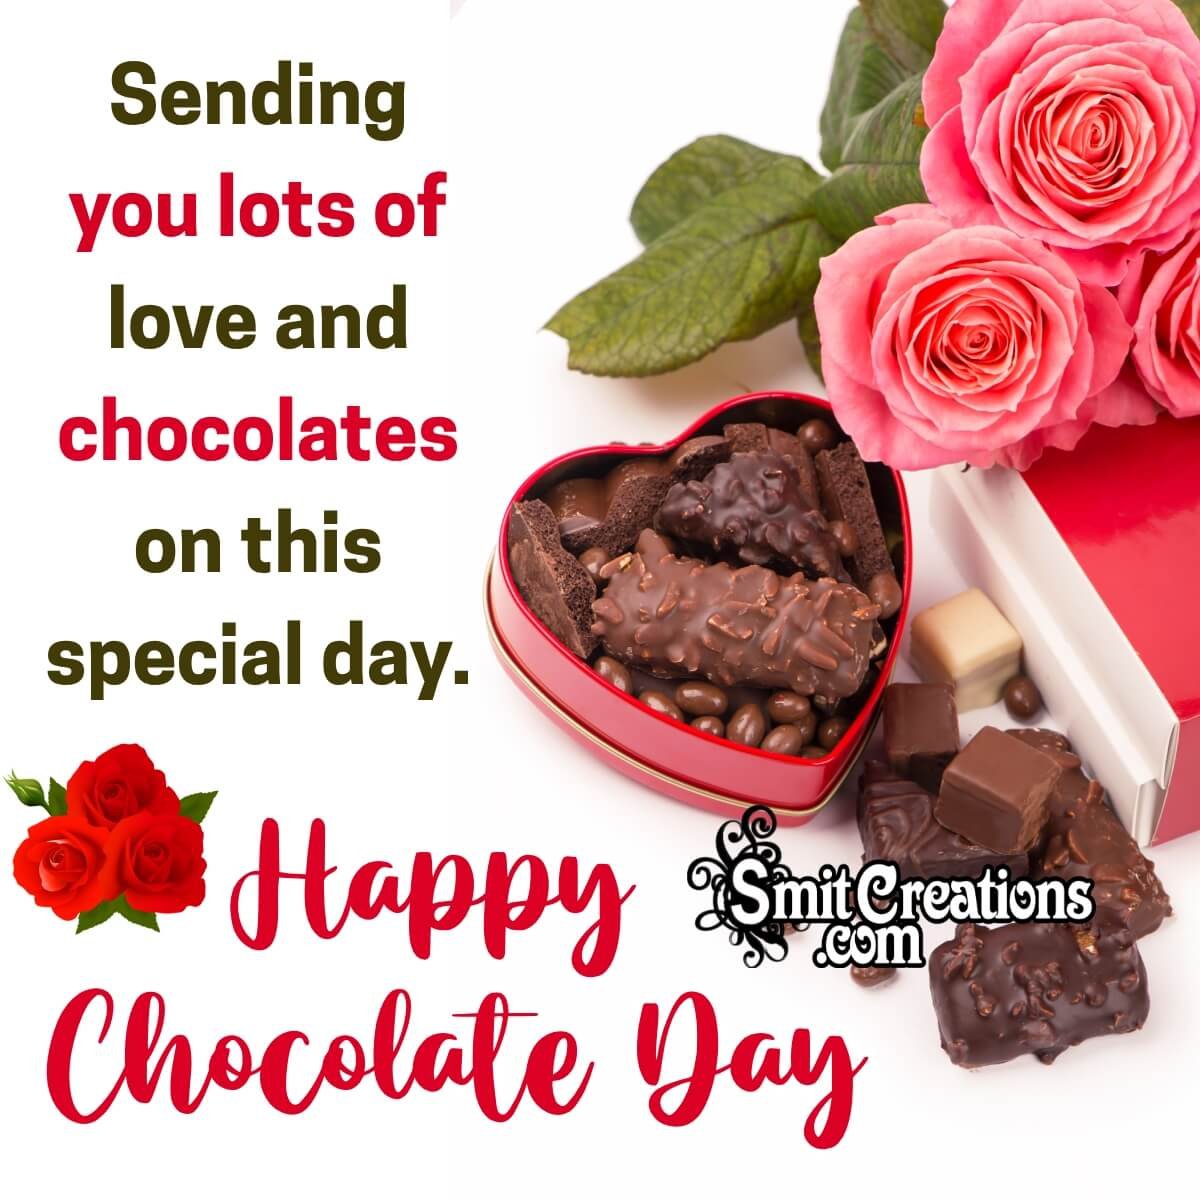 Happy Chocolate Day Image